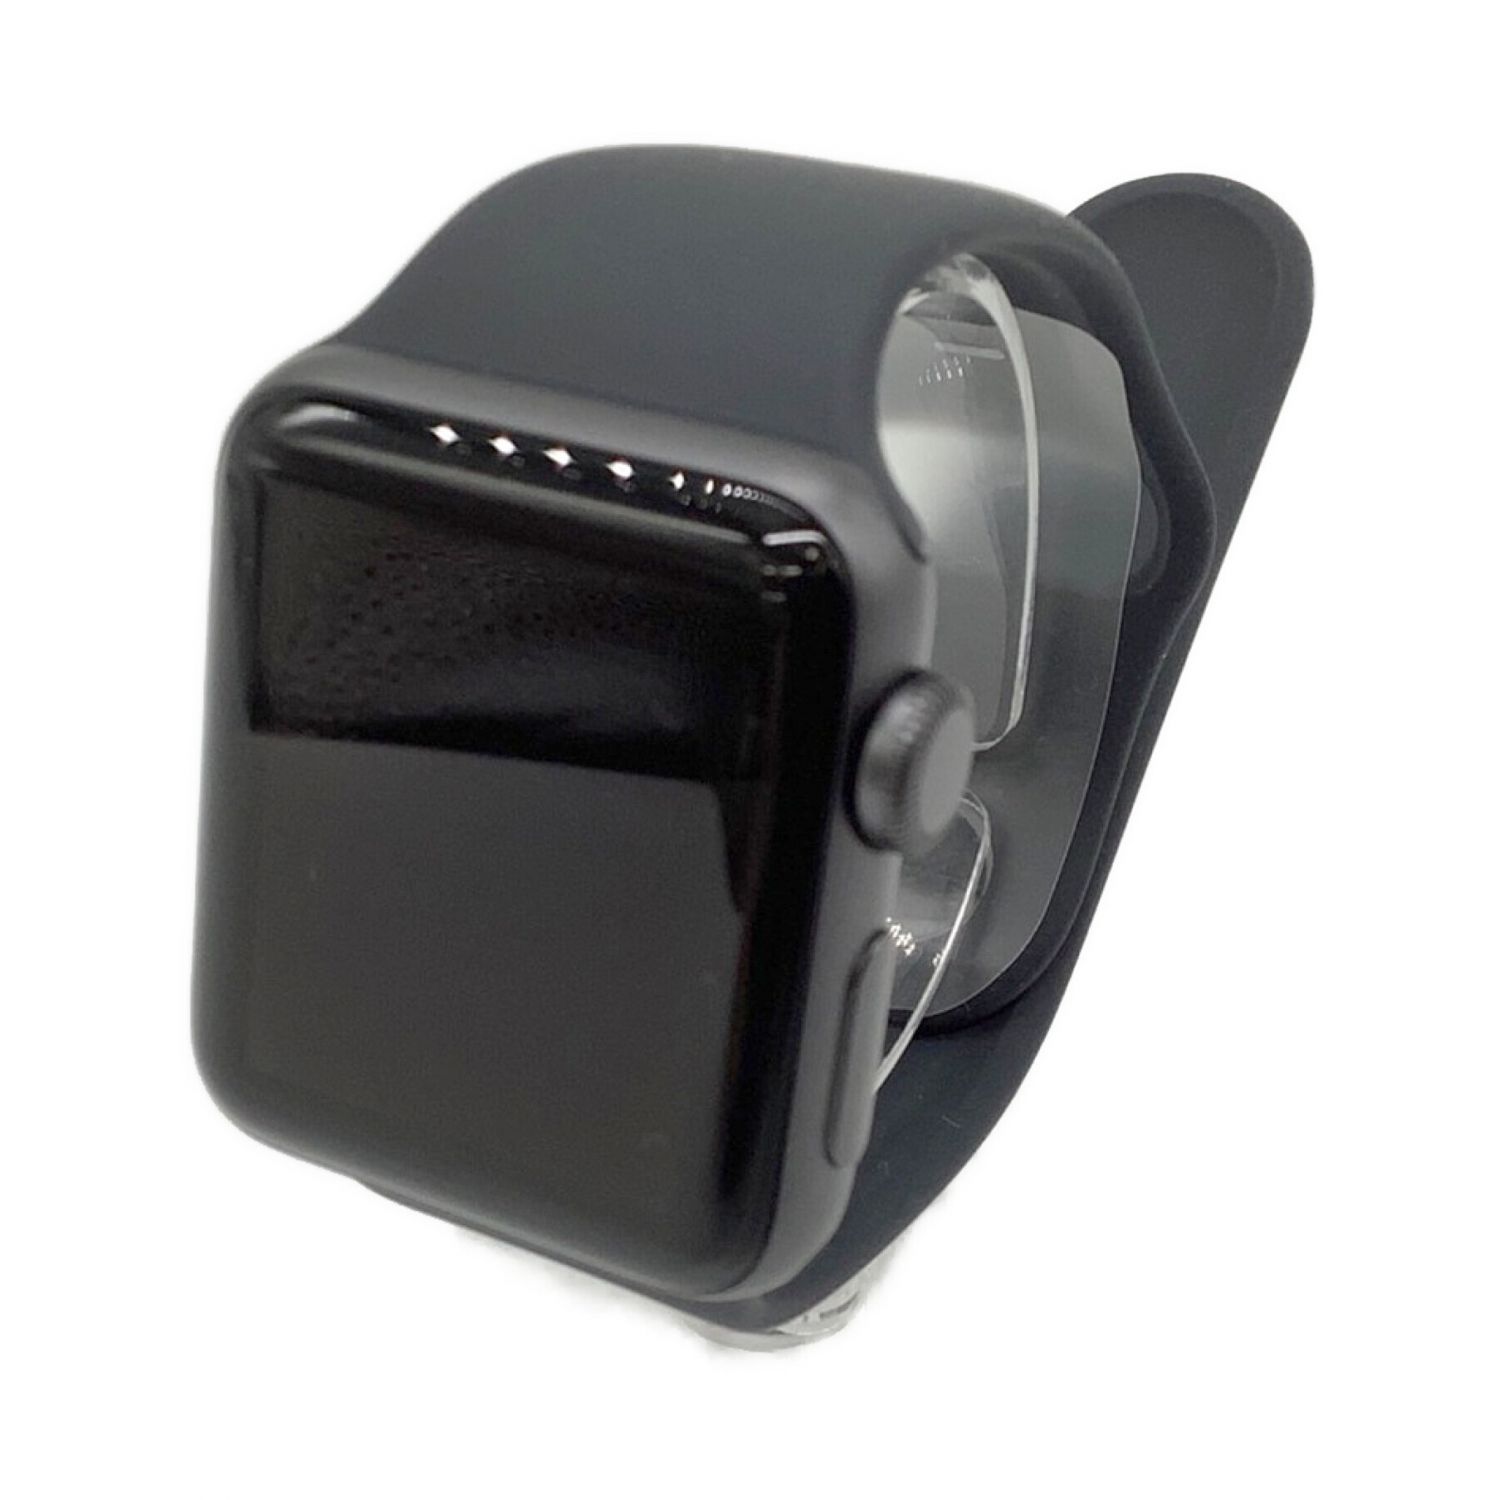 Apple (アップル) Apple Watch Series 3 スペースグレー A1858 GPS